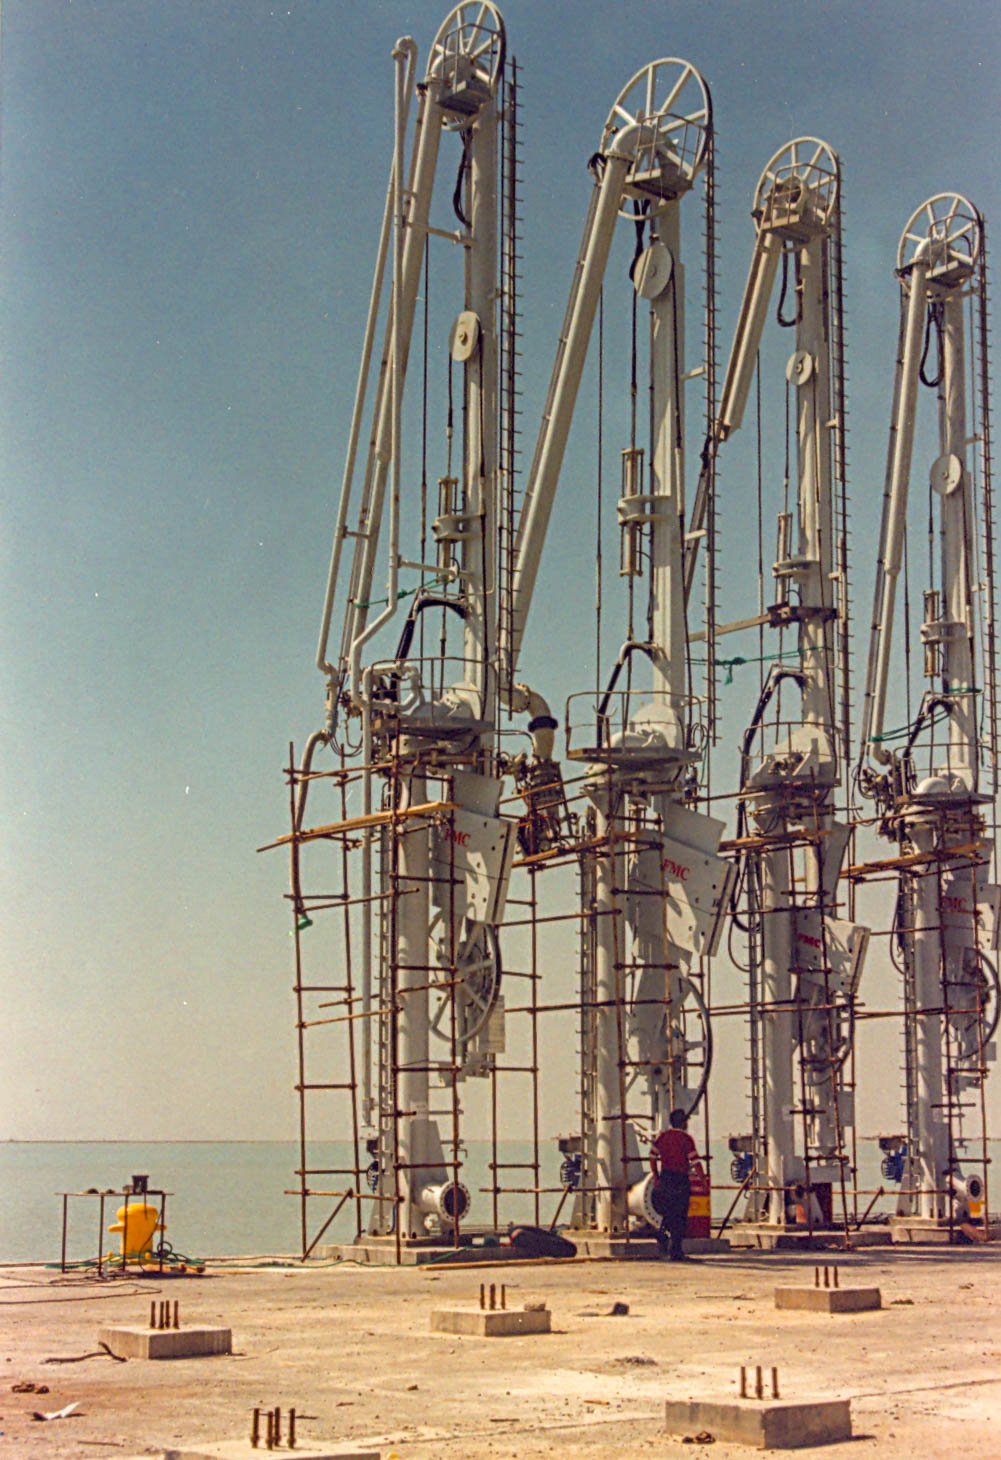 Loading Arms – Mahshahr Petrochemical Free Zone